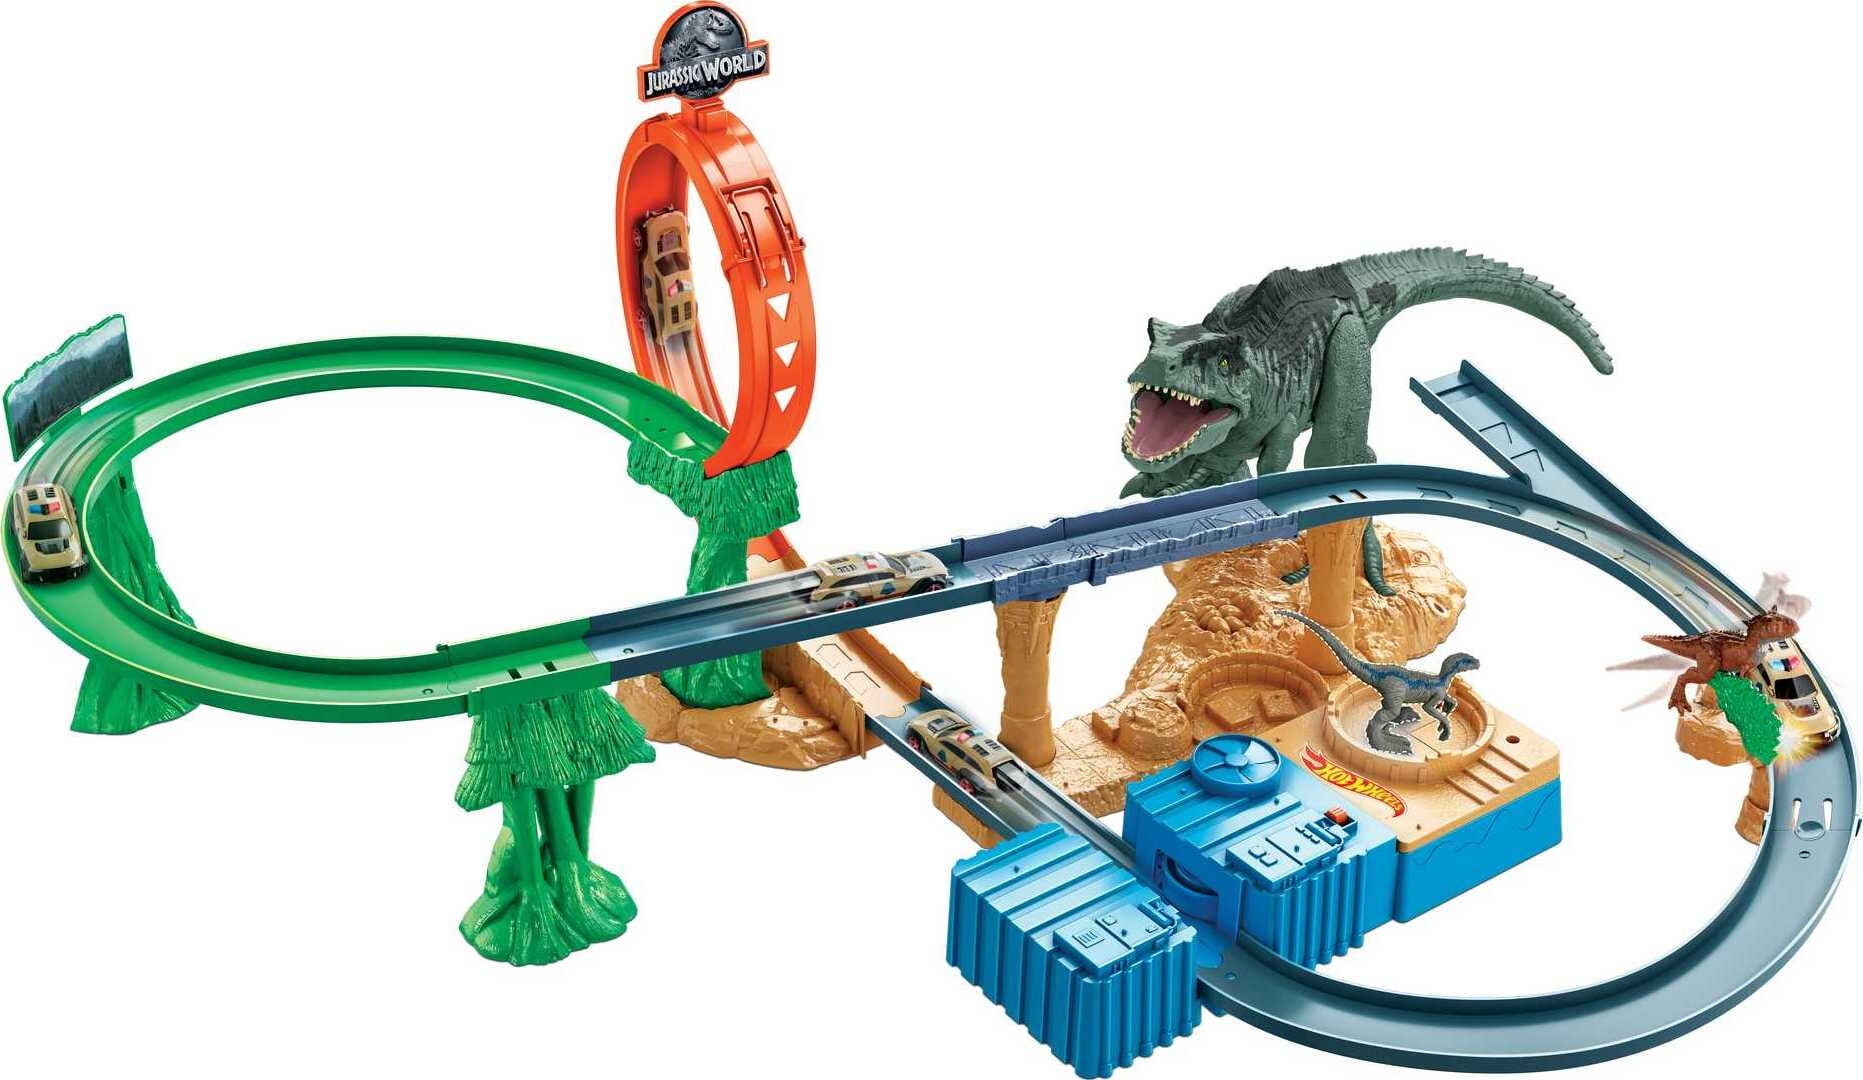 Hot Wheels Jurassic World Clash ‘N Crash Track Set, For Kids 3 Years Old & Up